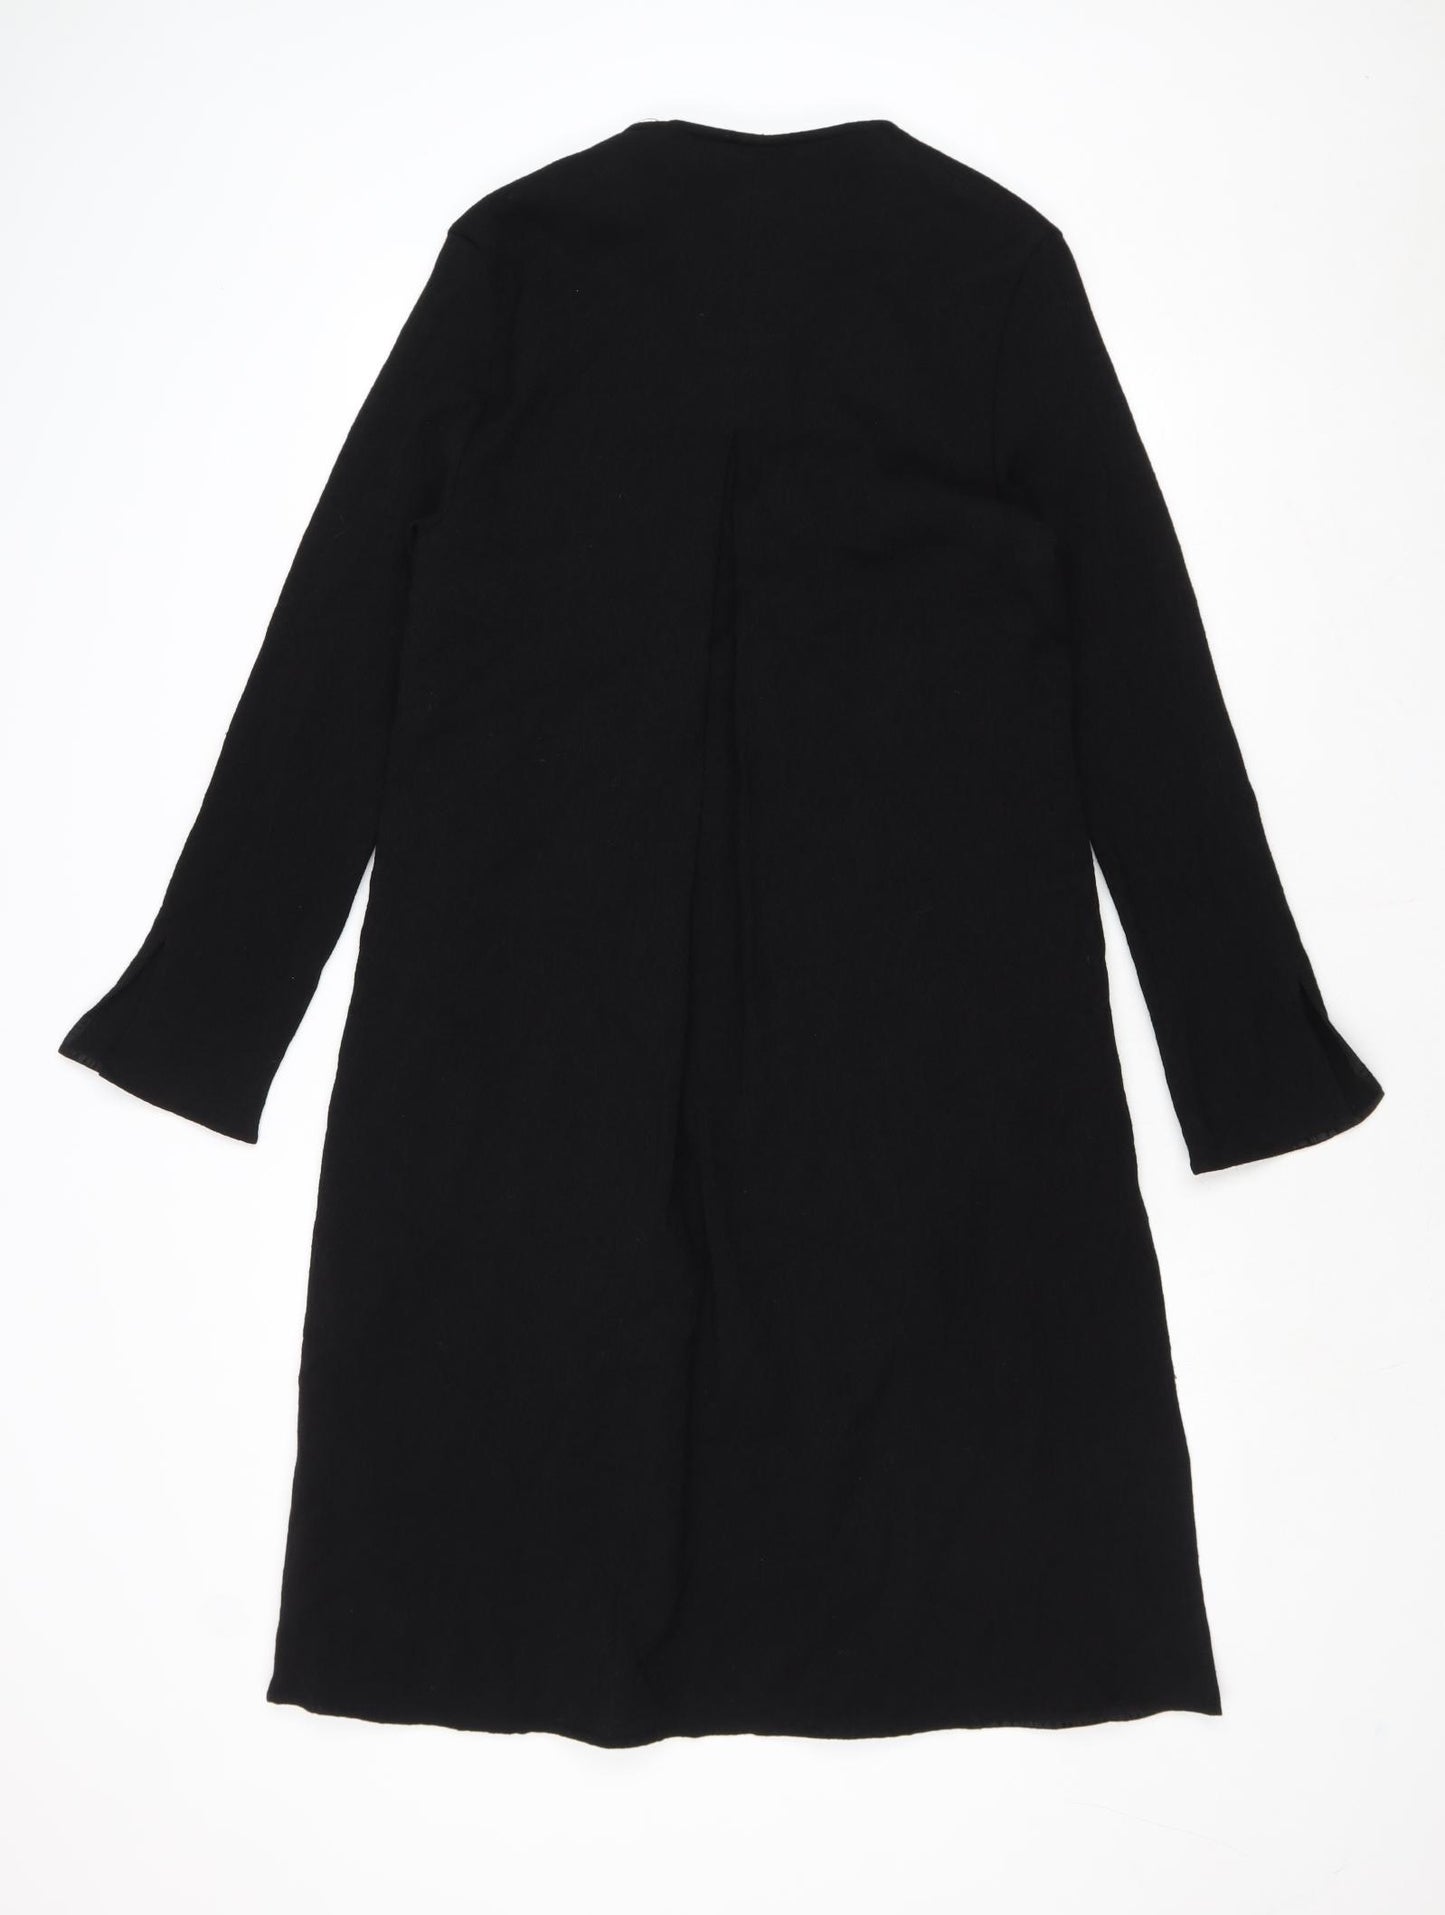 NITYA Womens Black Overcoat Coat Size 10 Button